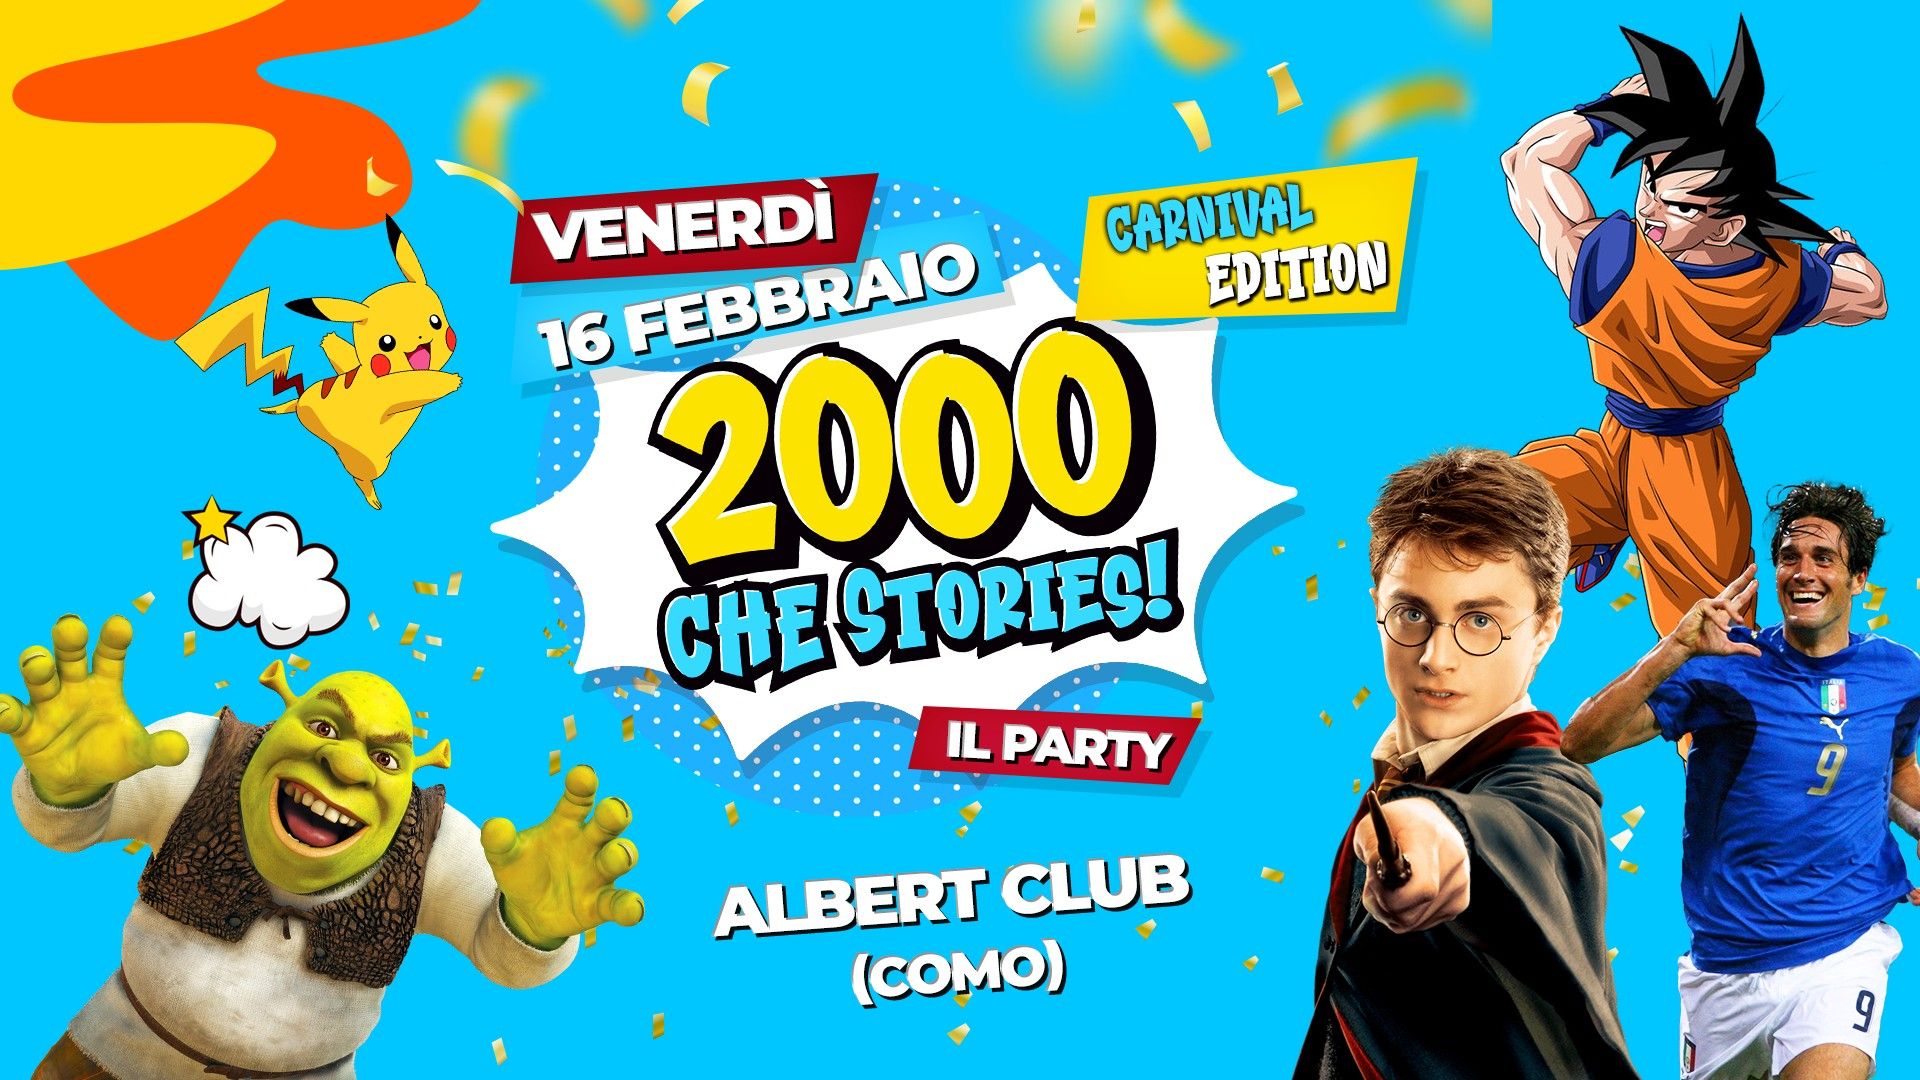 2000 Che Stories! - Il Party